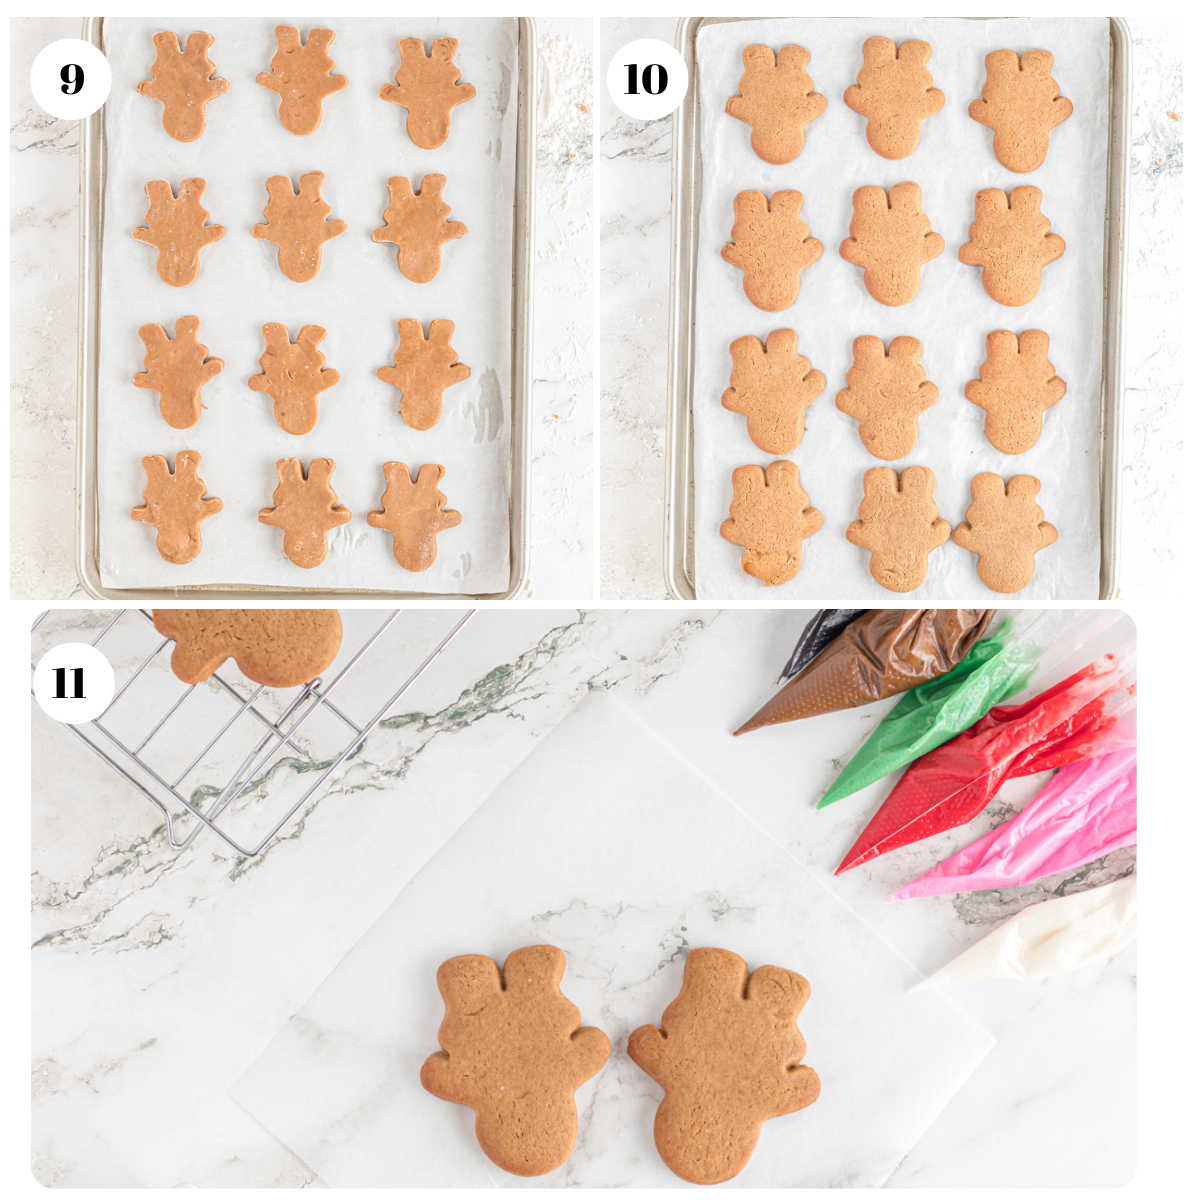 Baking gingerbread reindeer on cookie sheet and preparing to decorate.